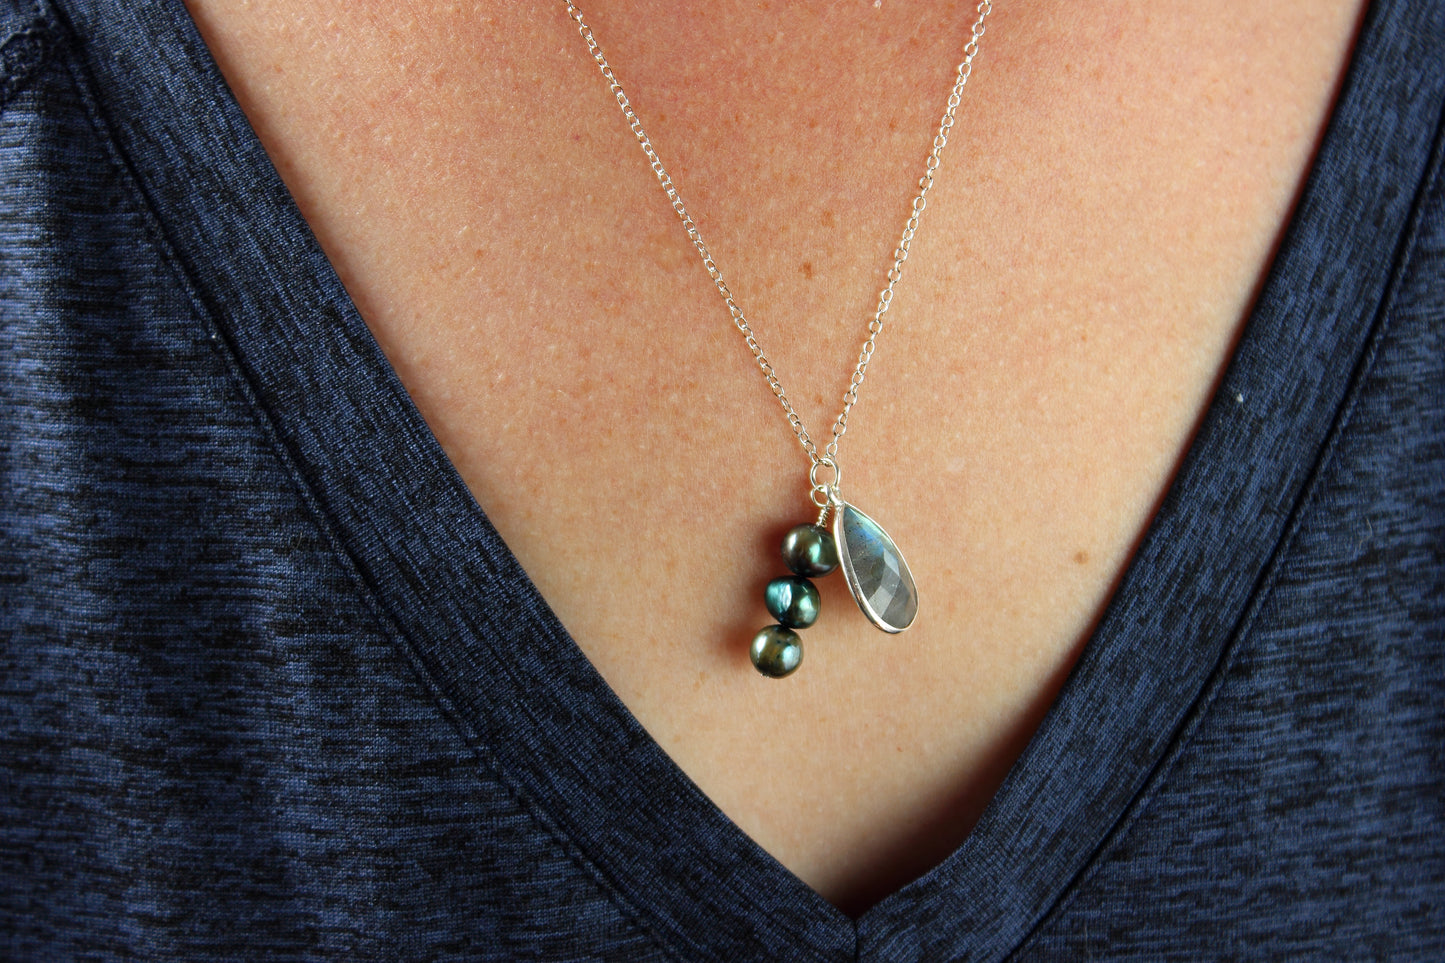 Flashy Labradorite and black pearl necklace